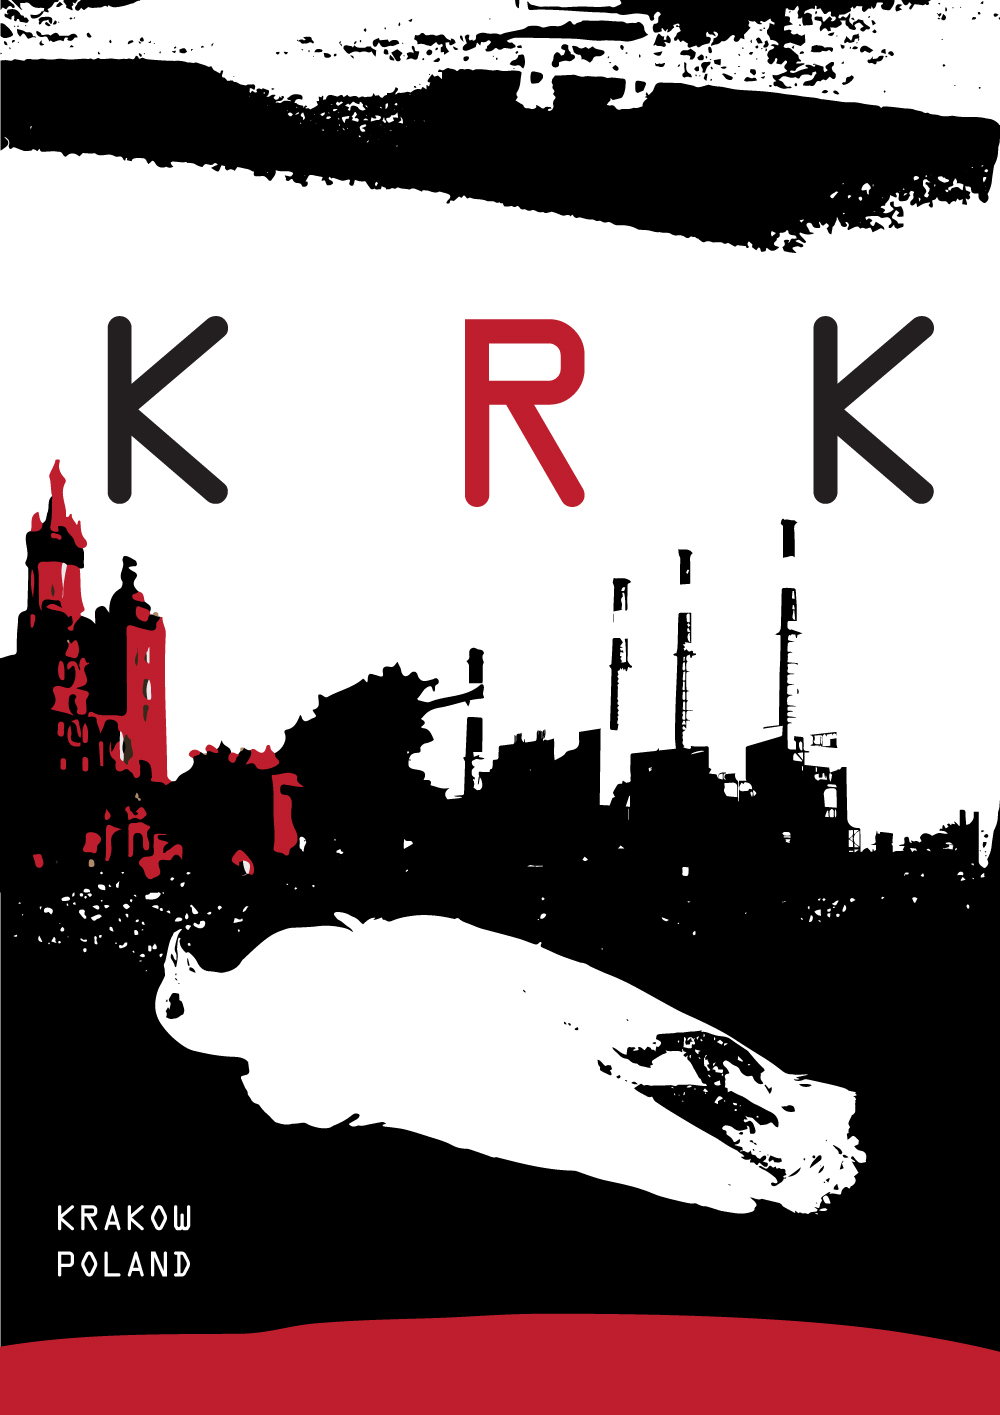 krakow poland smoggy smog disaster eco Ecology poster